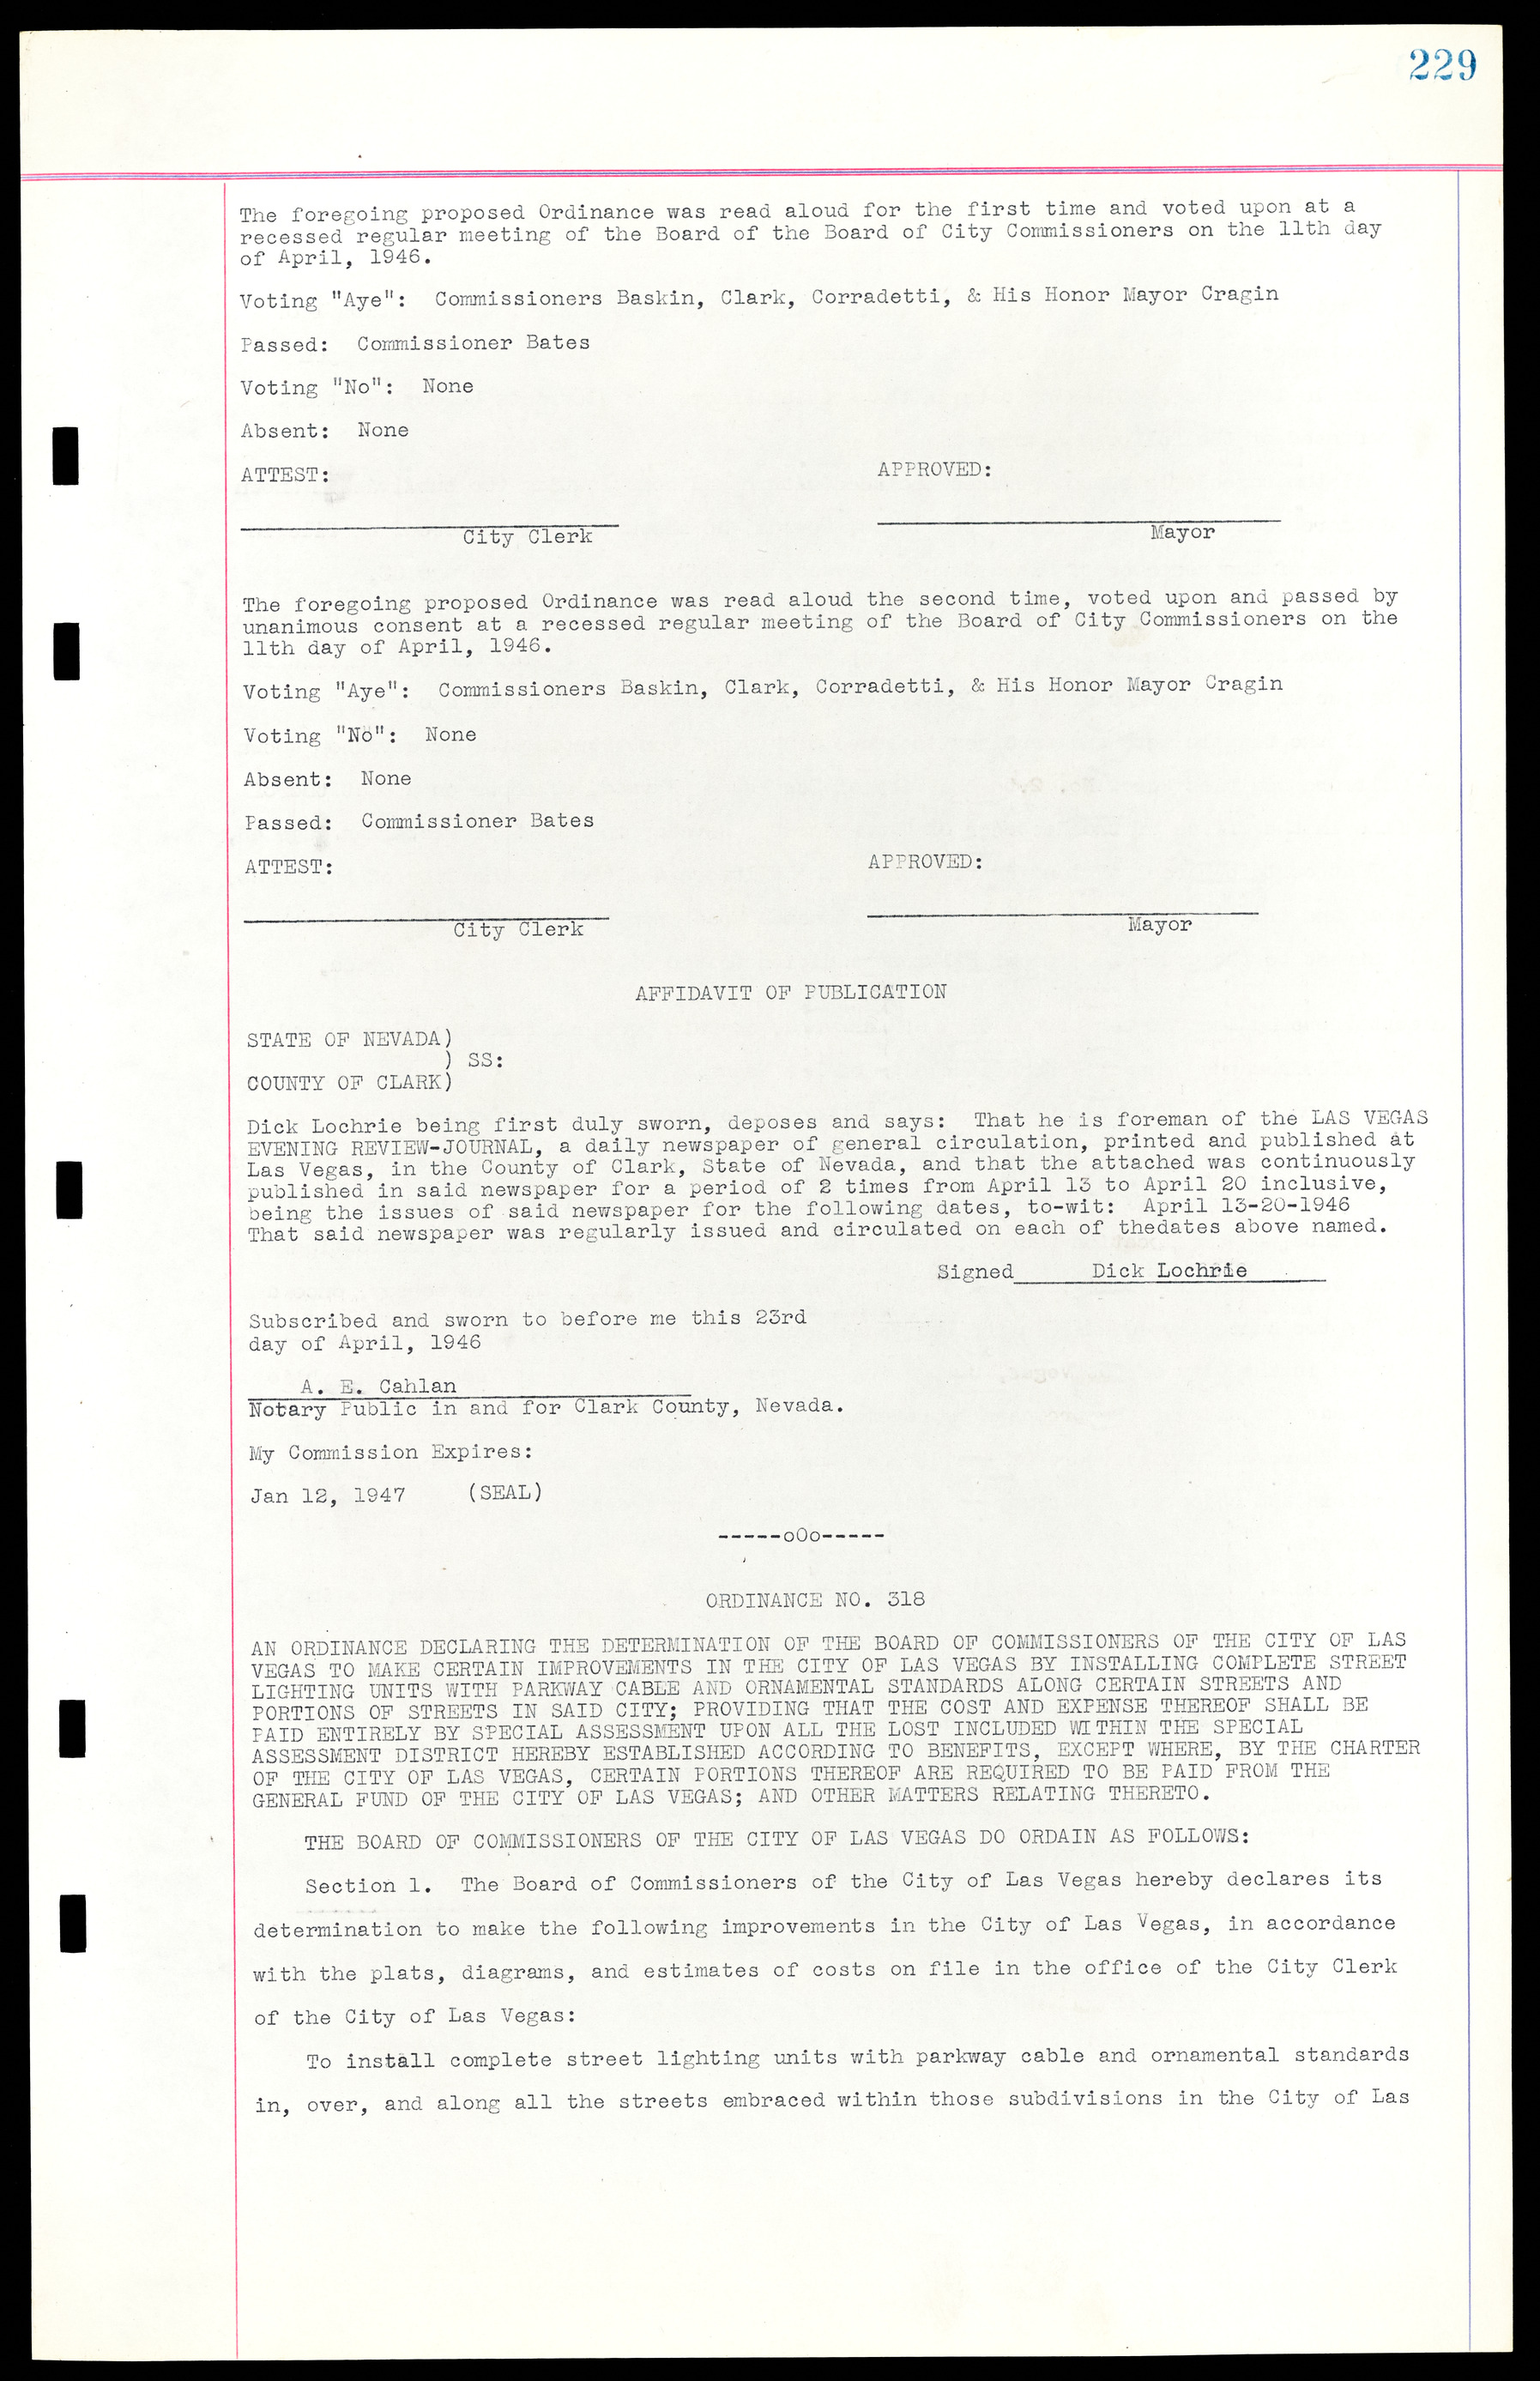 Las Vegas City Ordinances, March 31, 1933 to October 25, 1950, lvc000014-258